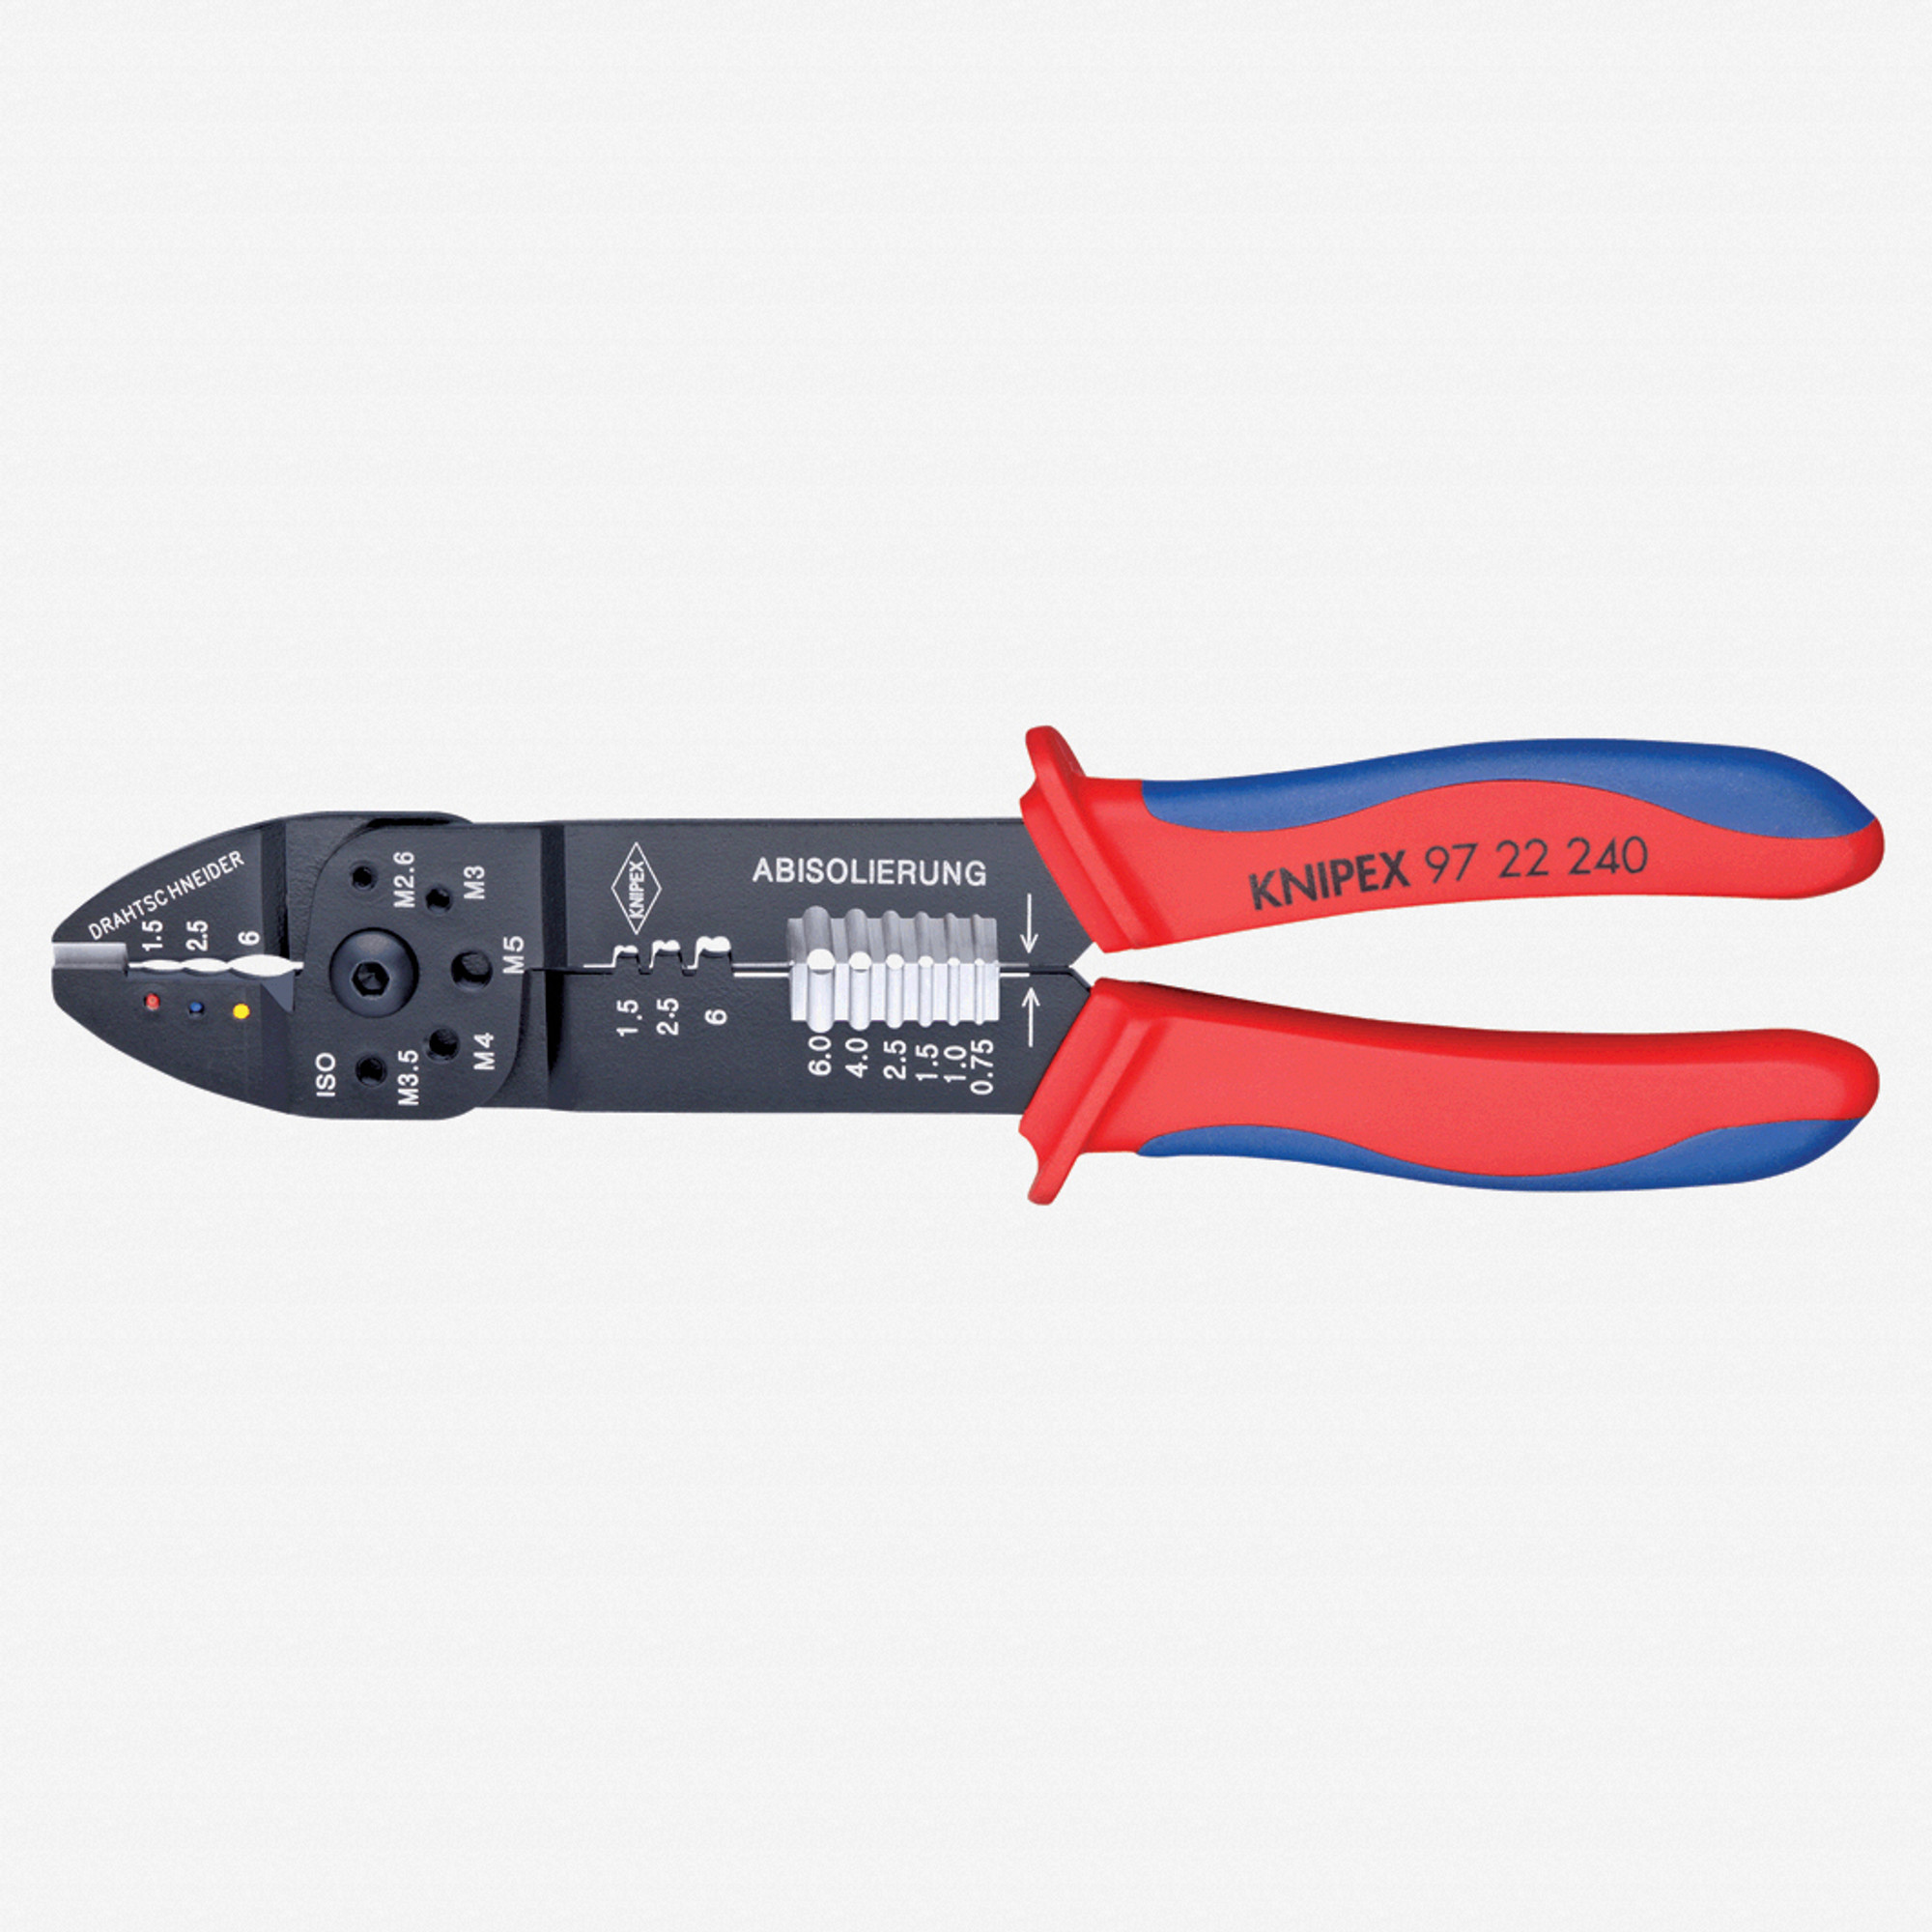 Knipex Crimping Pliers - MultiGrip